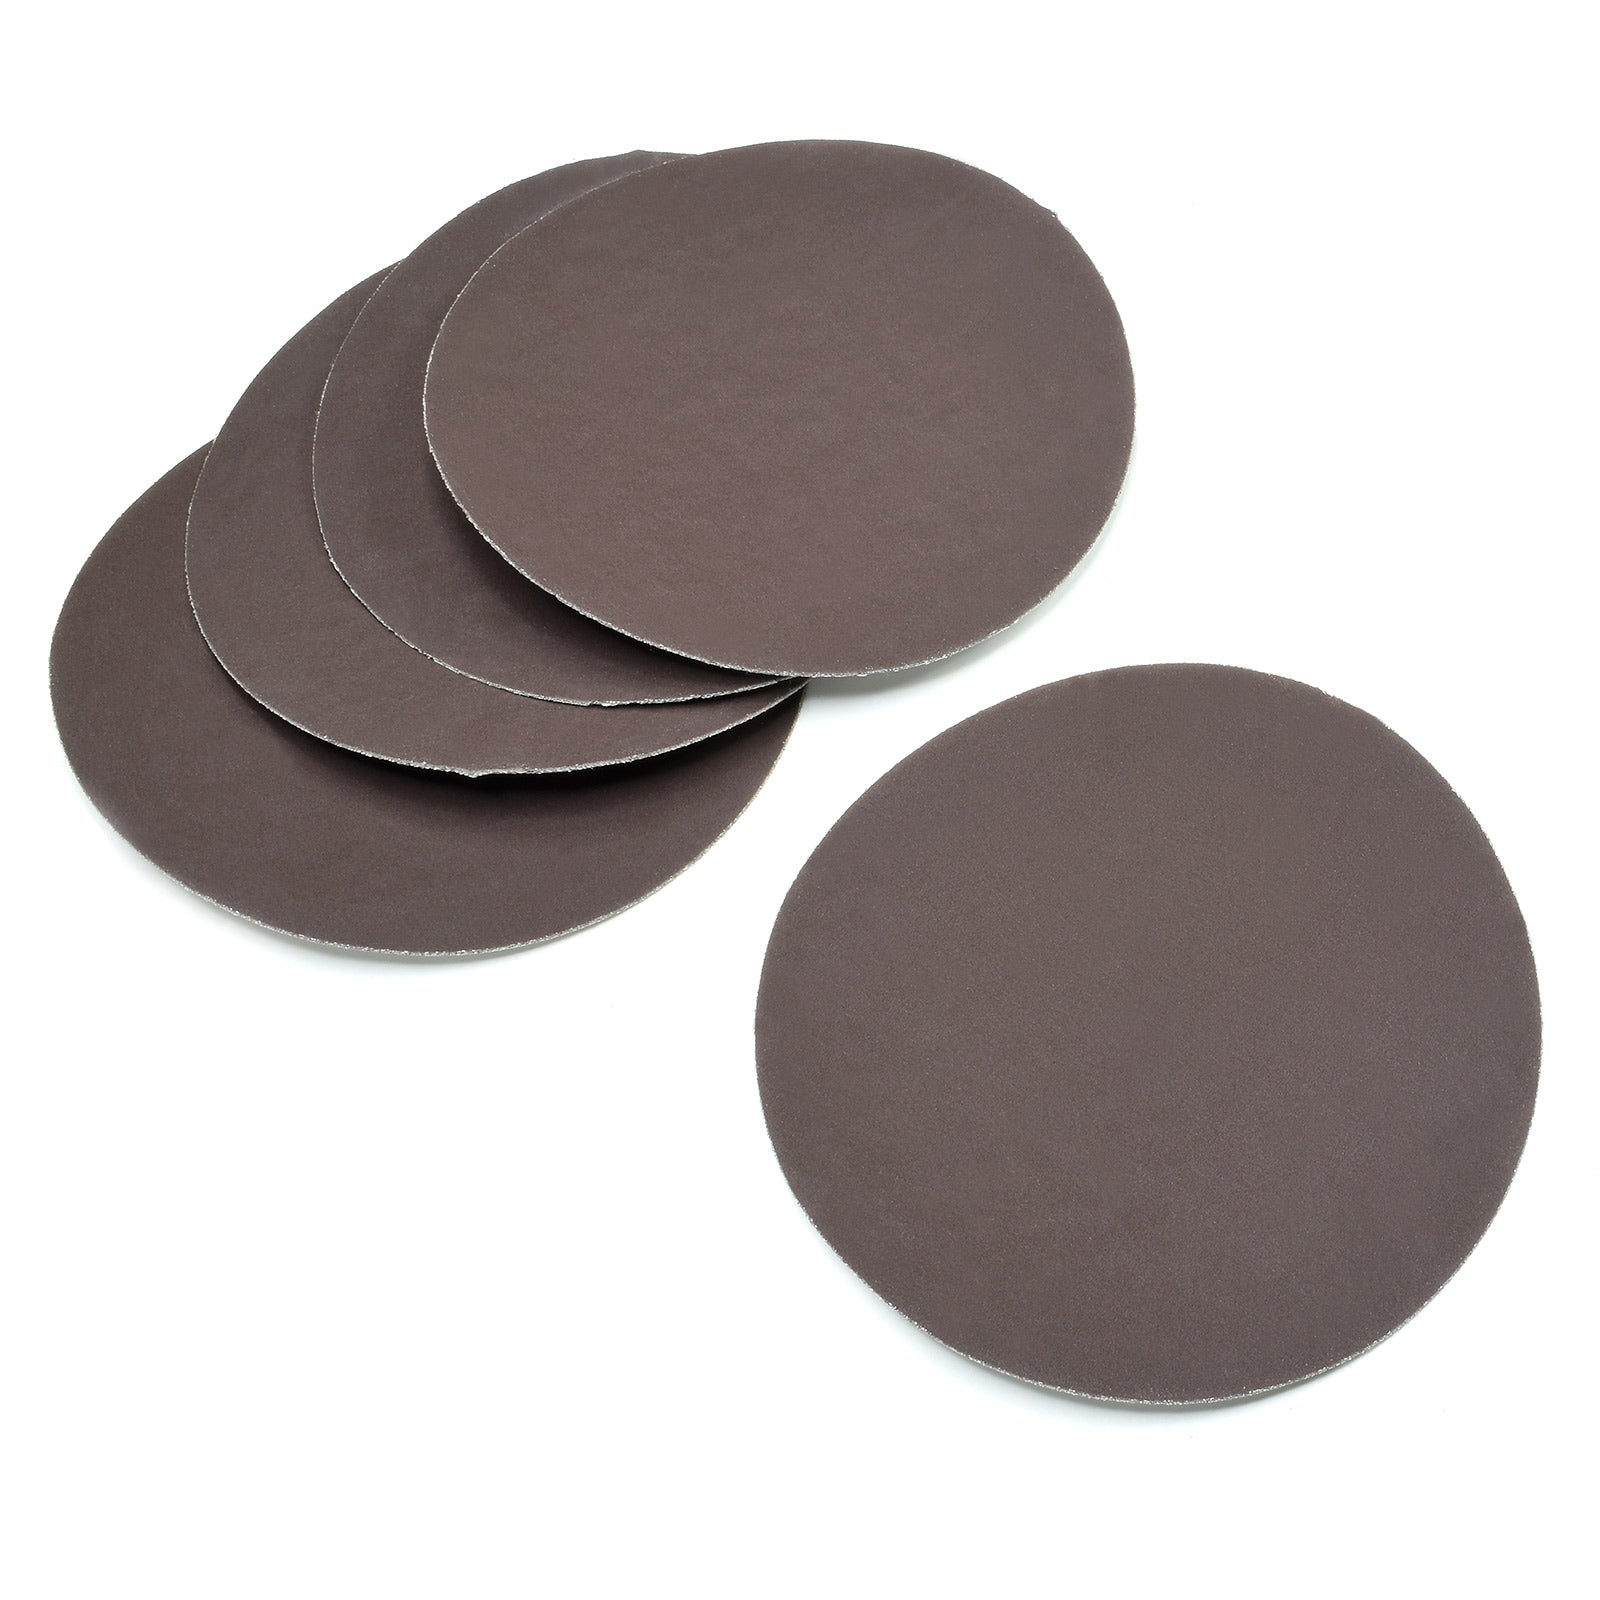 5" Sanding Disk, 400 Grit, Package of 5 - Micro - Mark Sandpaper & Sanding Sponges